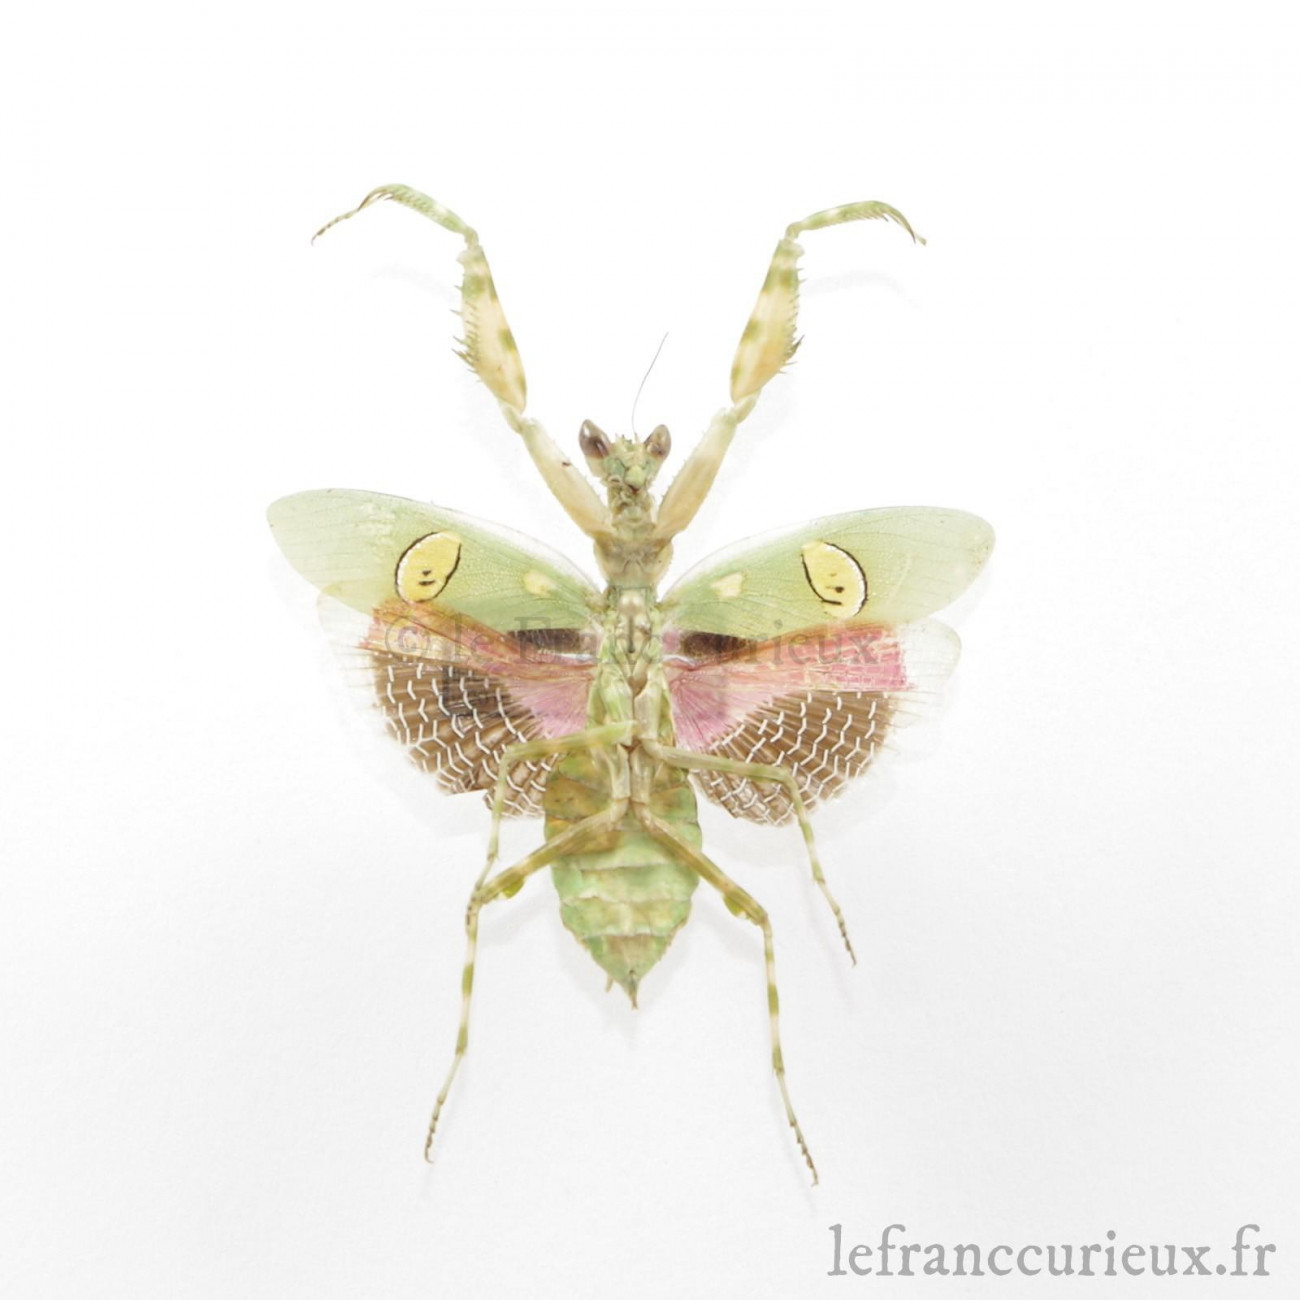 Creobroter gemmatus femelle A1 d'Indonesie Entomologie Insecte Mantidae 